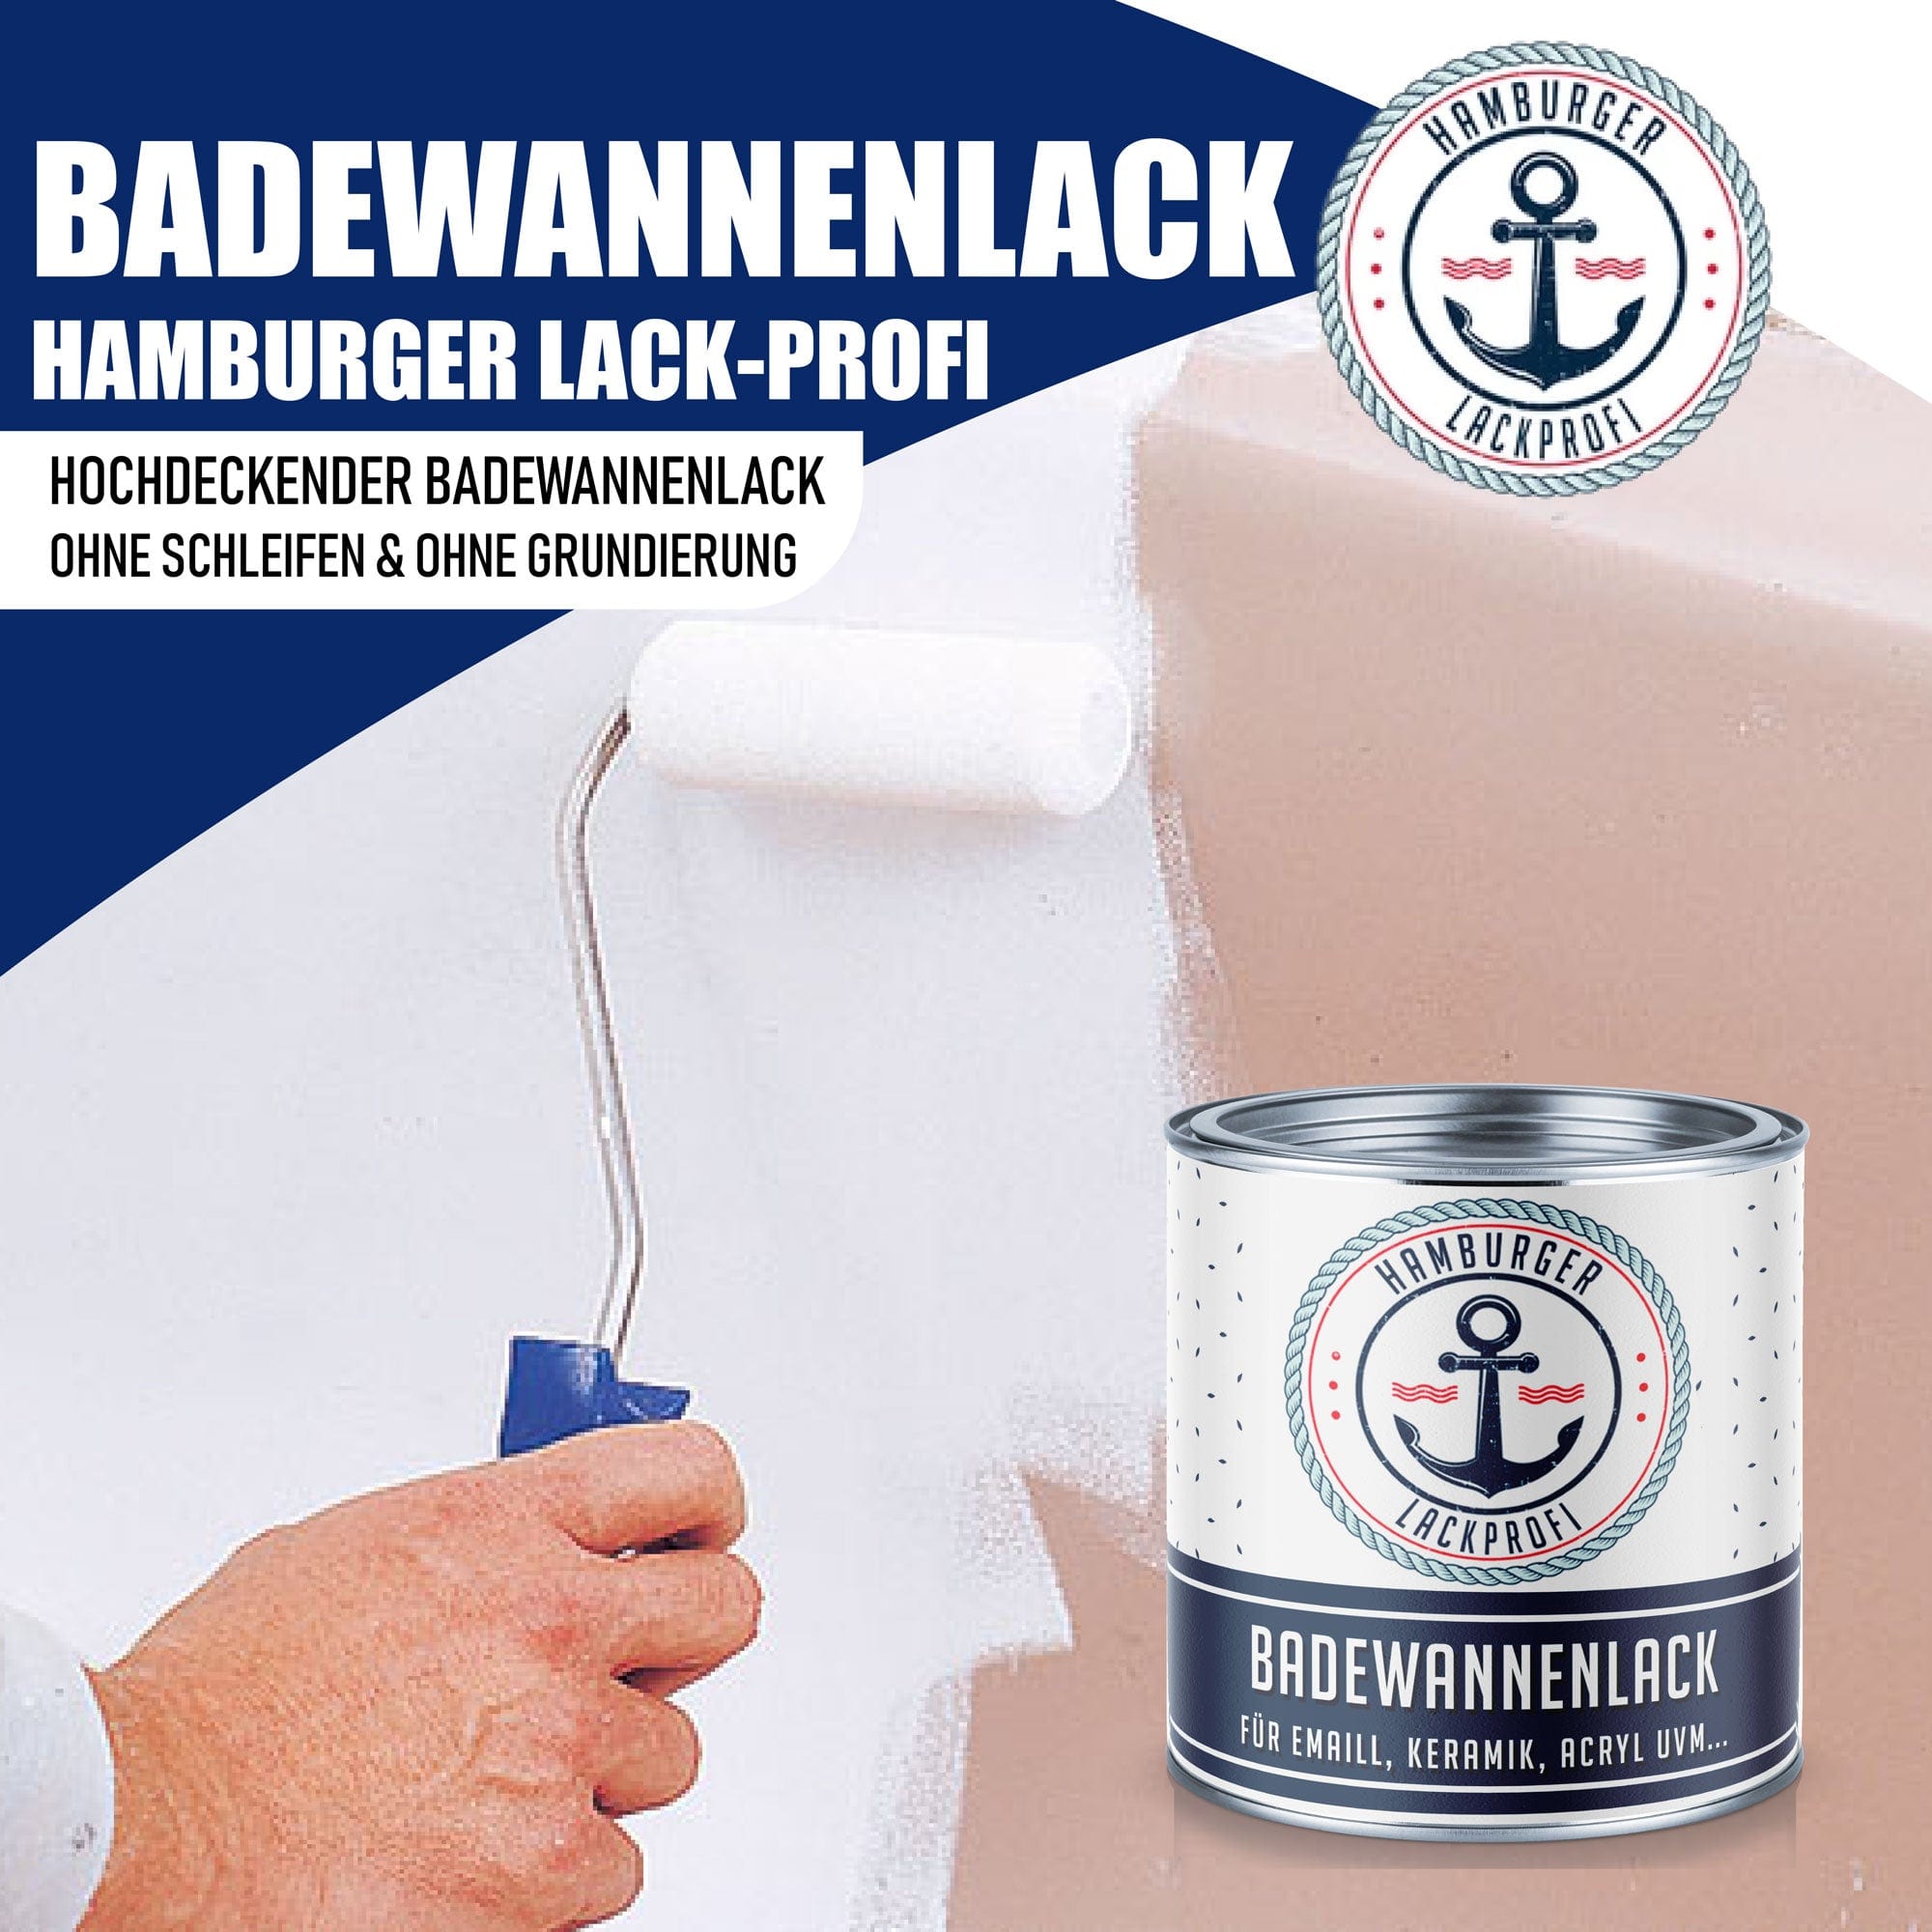 Hamburger Lack-Profi Badewannenlack Hamburger Lack-Profi 2K Badewannenlack Telegrau 2 RAL 7046 - Glänzend / Seidenmatt / Matt